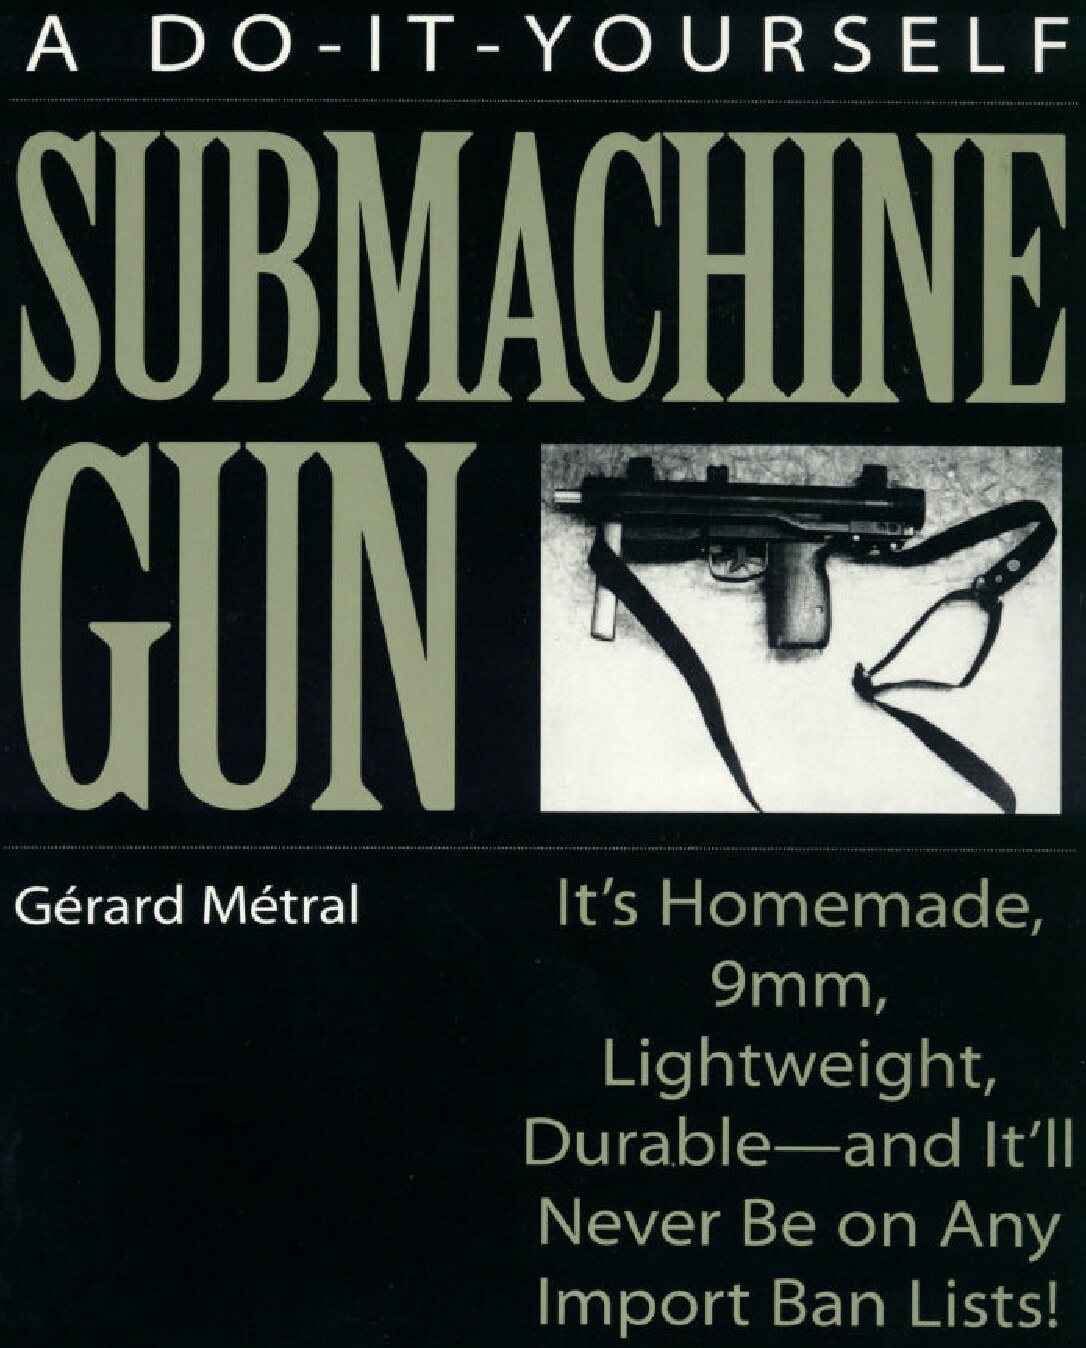 A Do-it-Yourself Submachine Gun